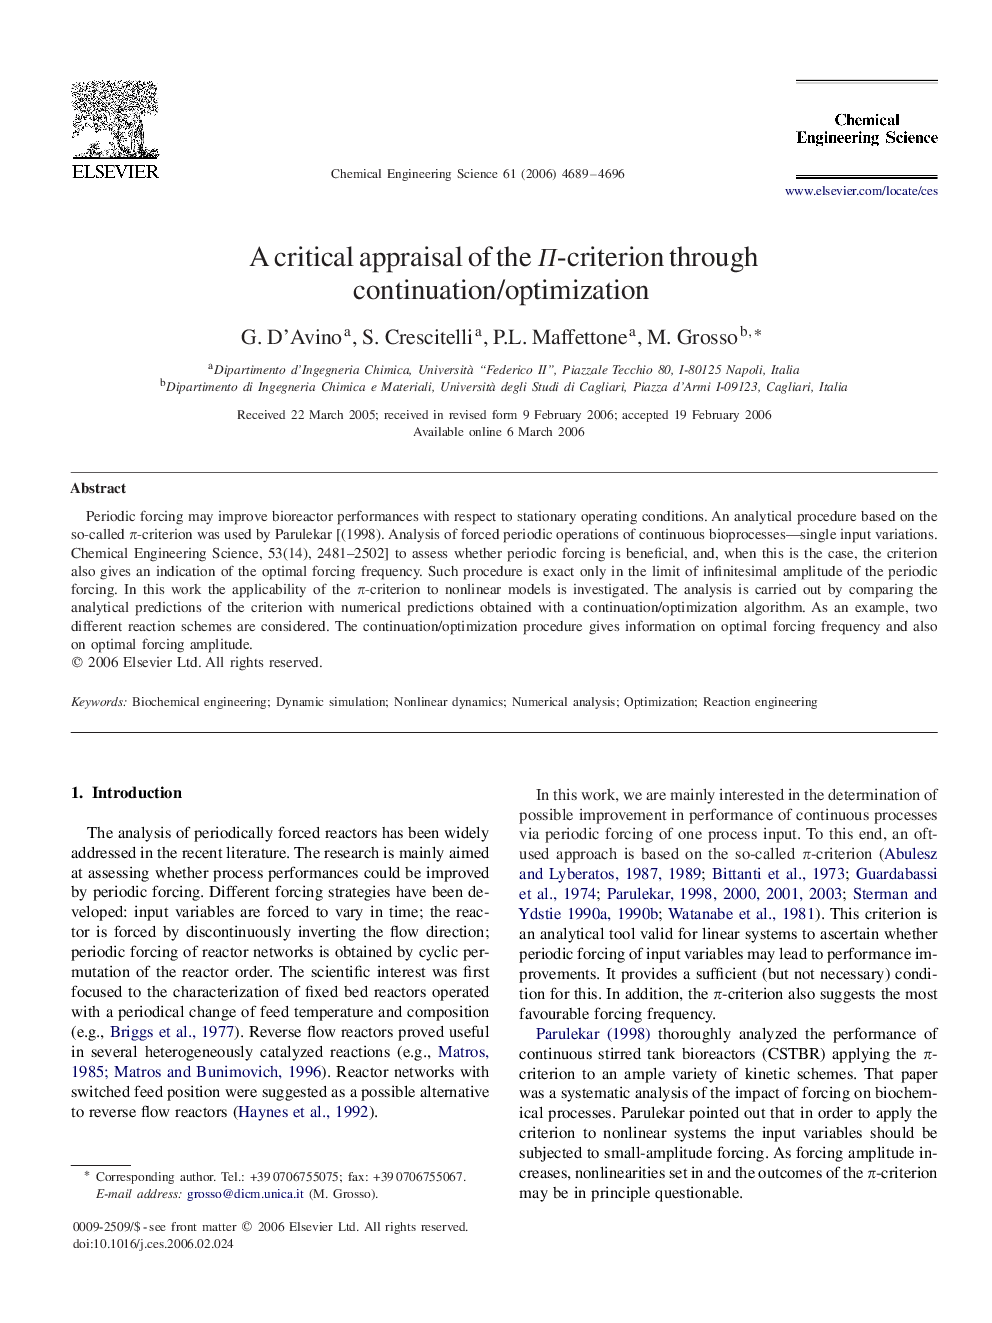 A critical appraisal of the ΠΠ-criterion through continuation/optimization